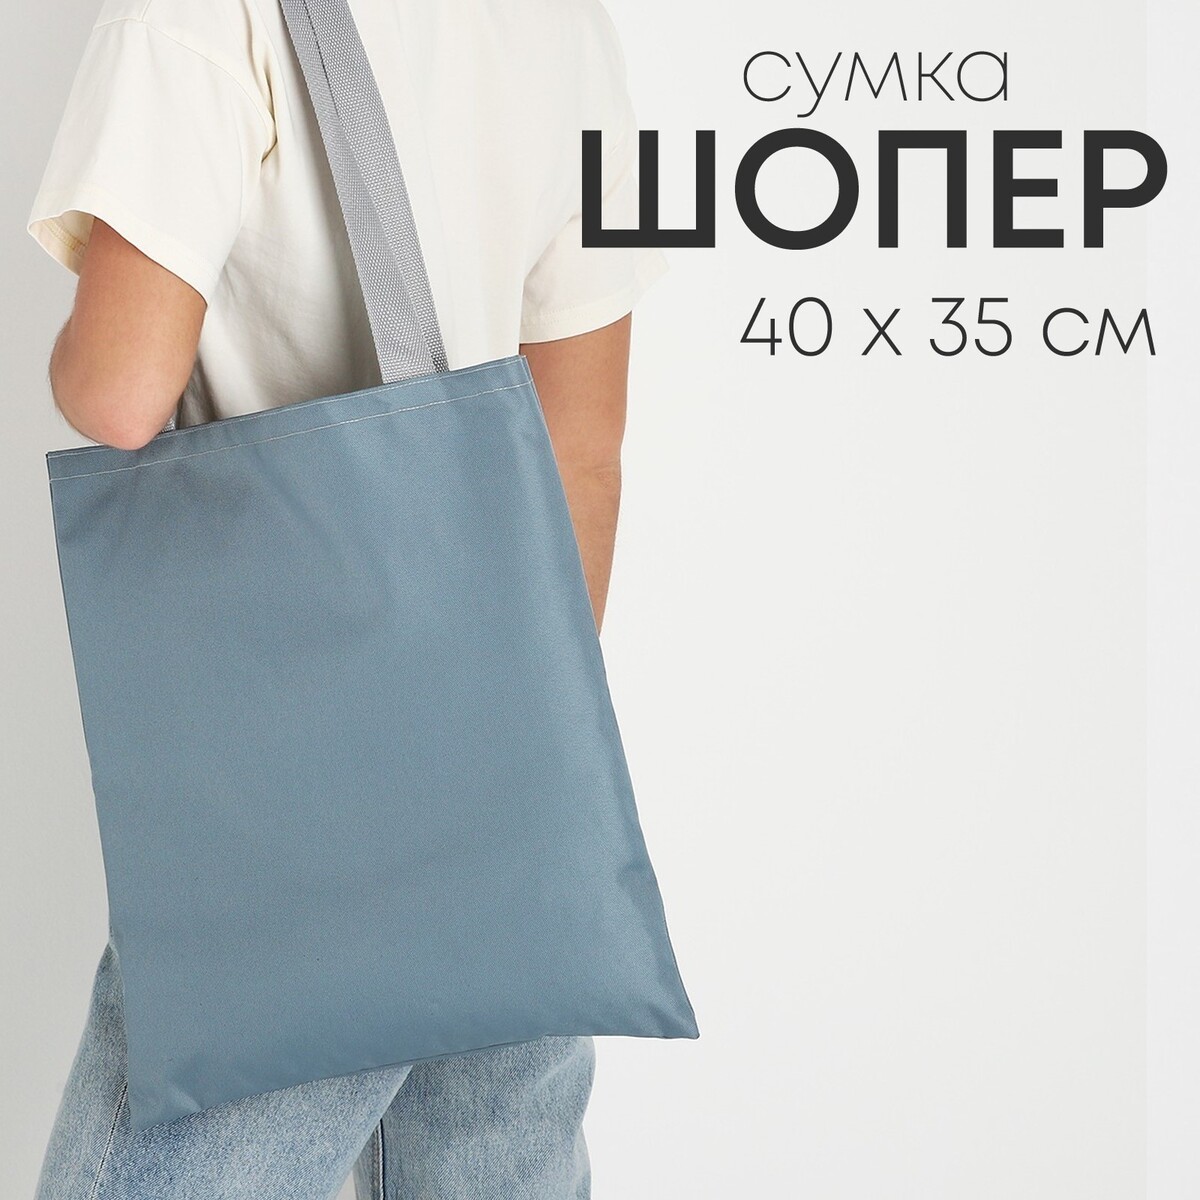 Сумка шопер nazamok, 35х0.5х40 см, отд без молнии, без подклада, серая сумка шопер без застежки из текстиля серый